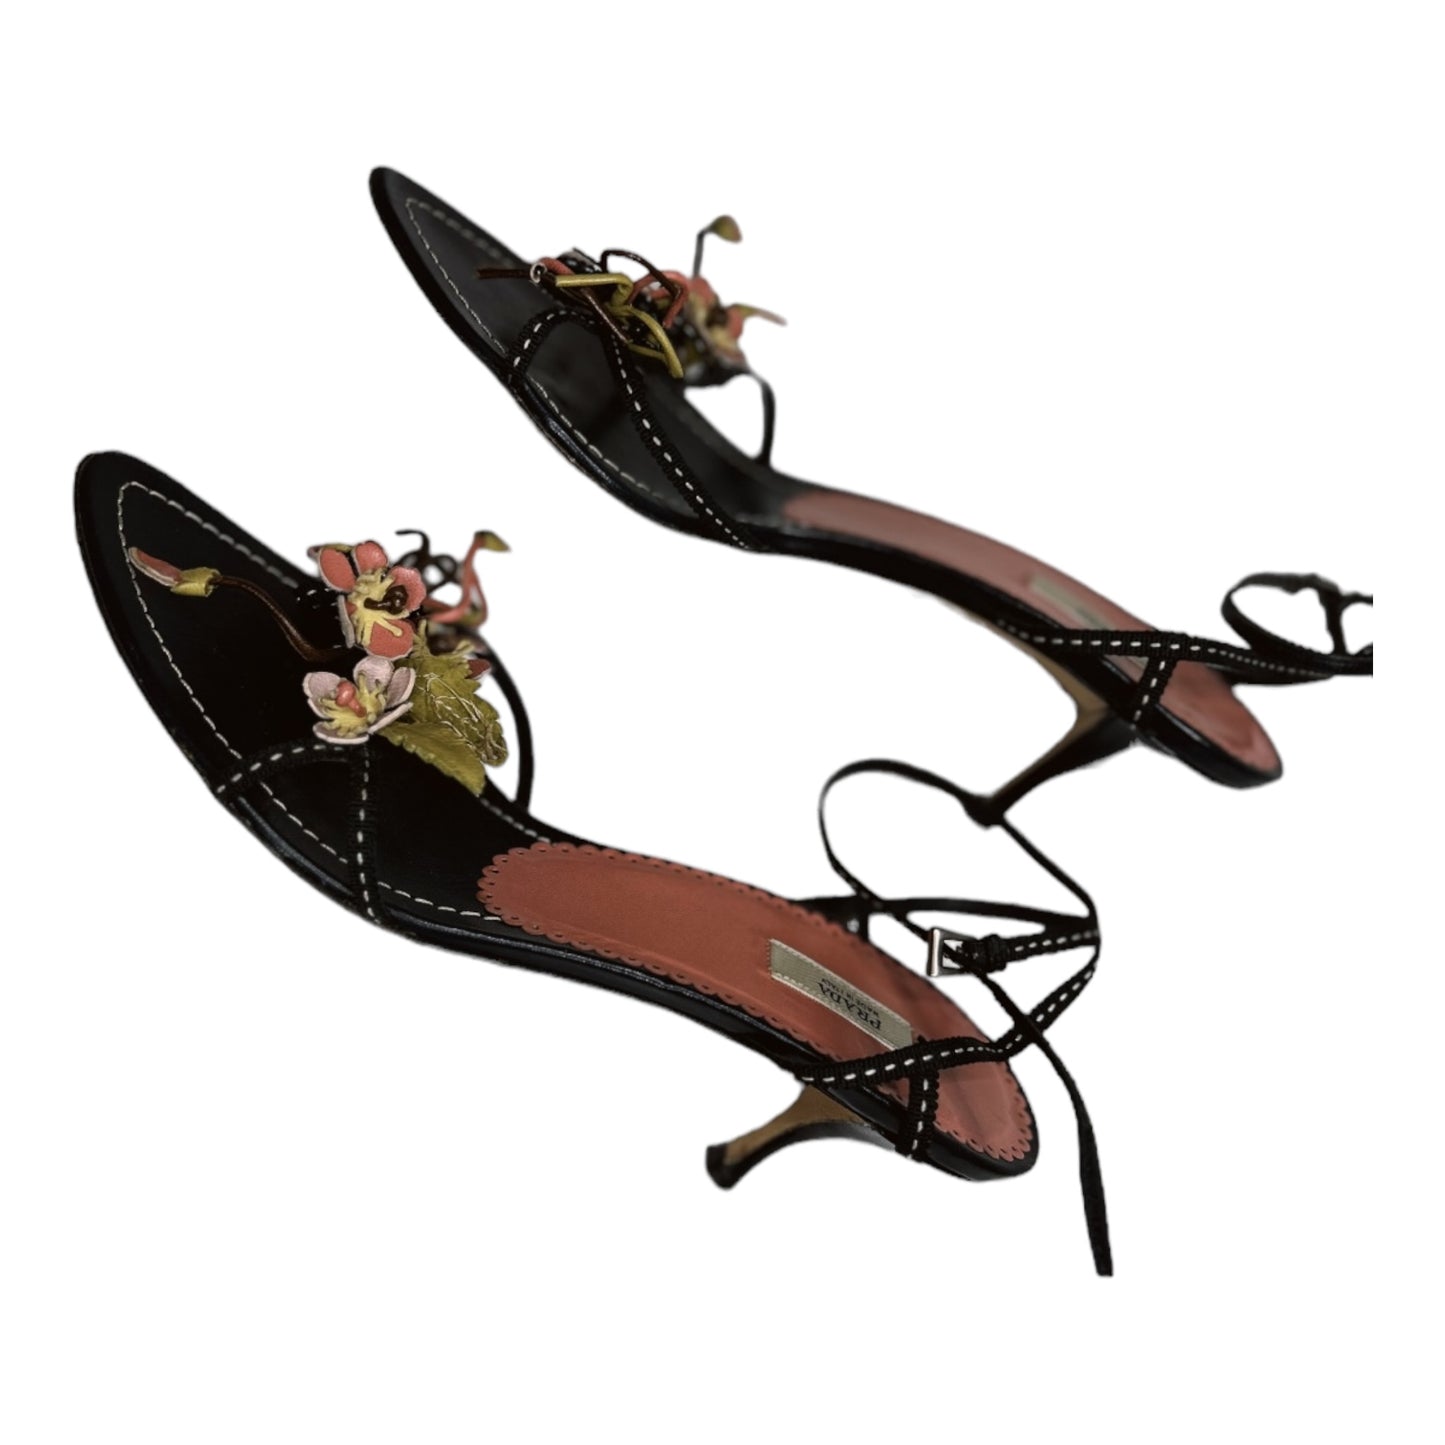 Vintage iconic Prada floral sandals